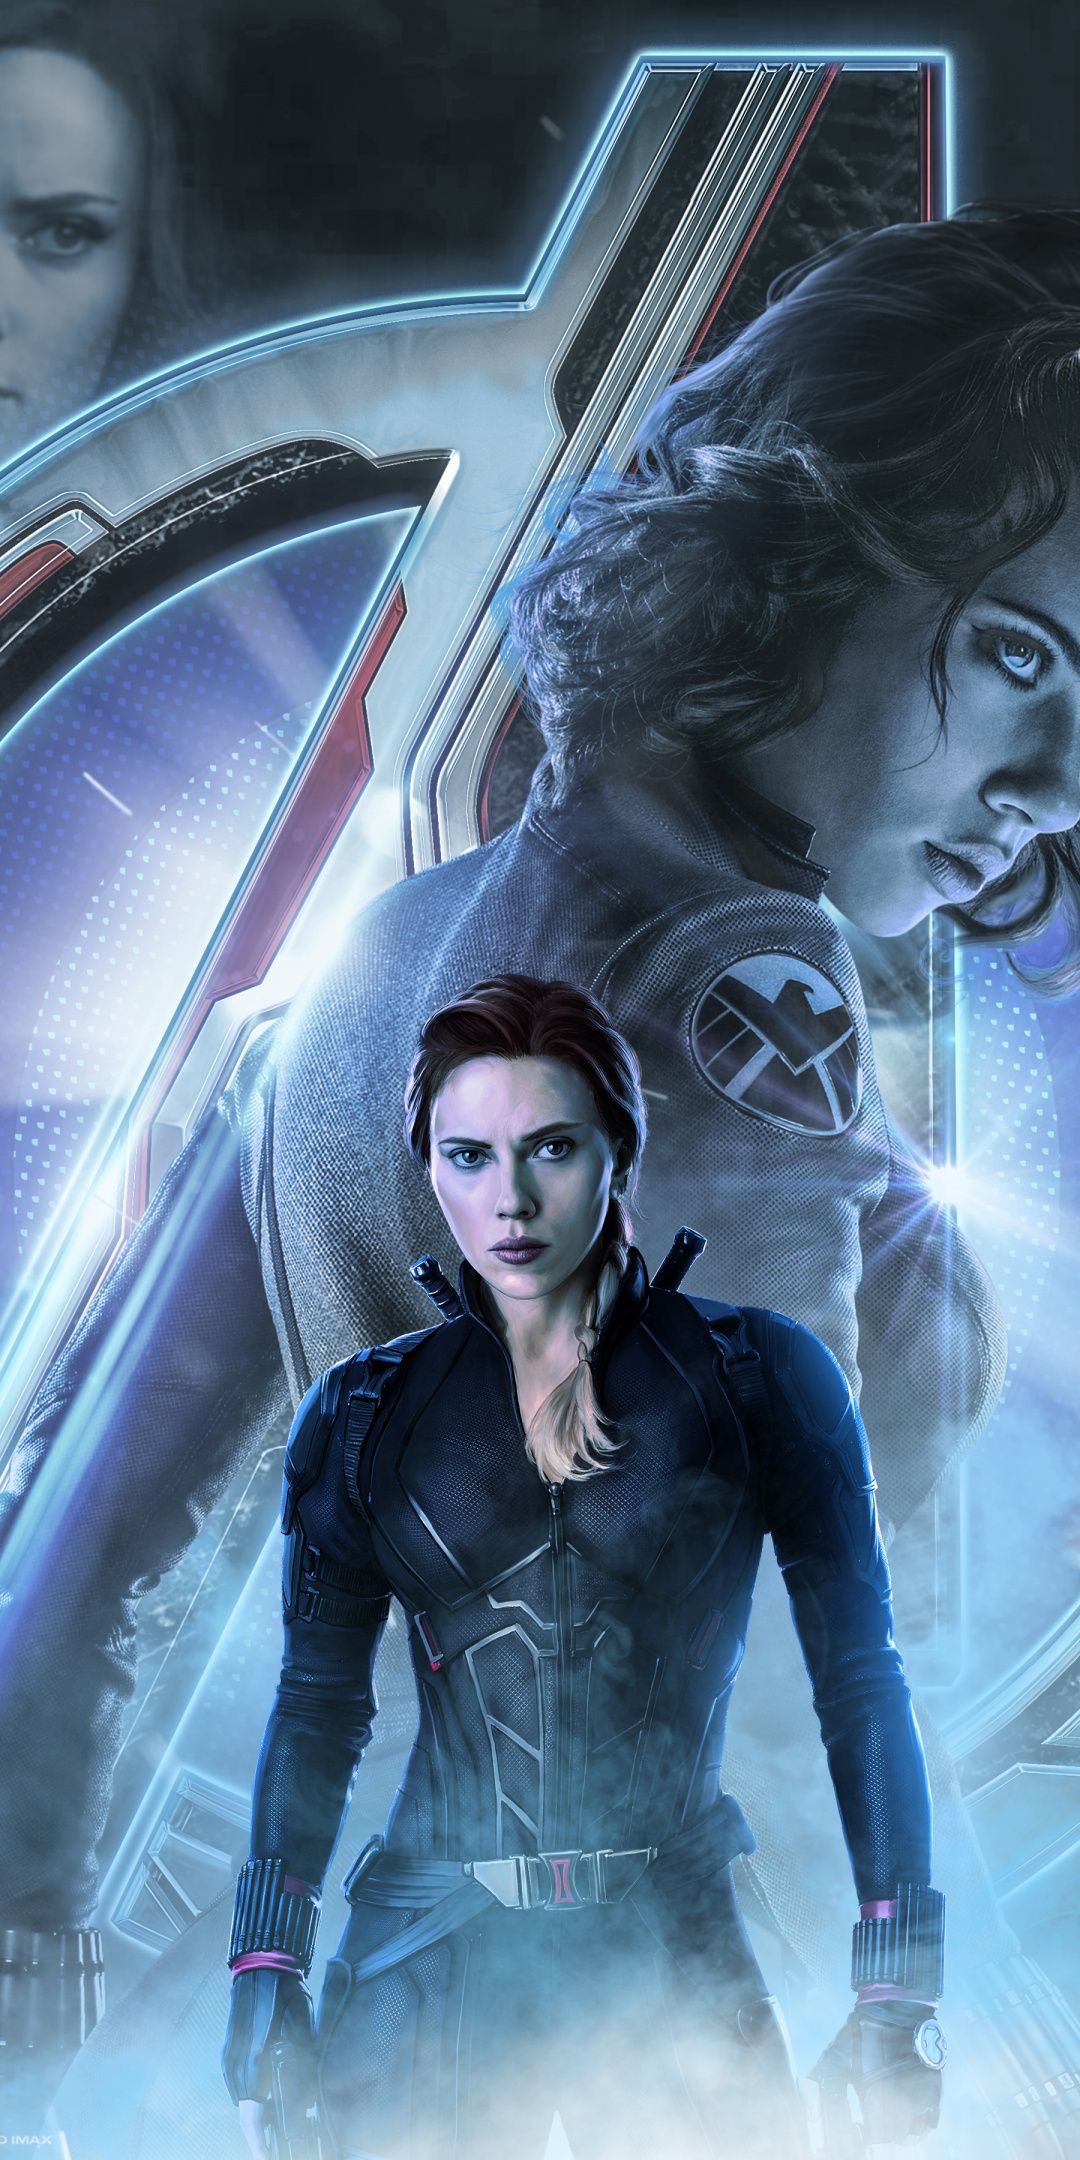  movie Avengers Endgame Black Widow movie poster art